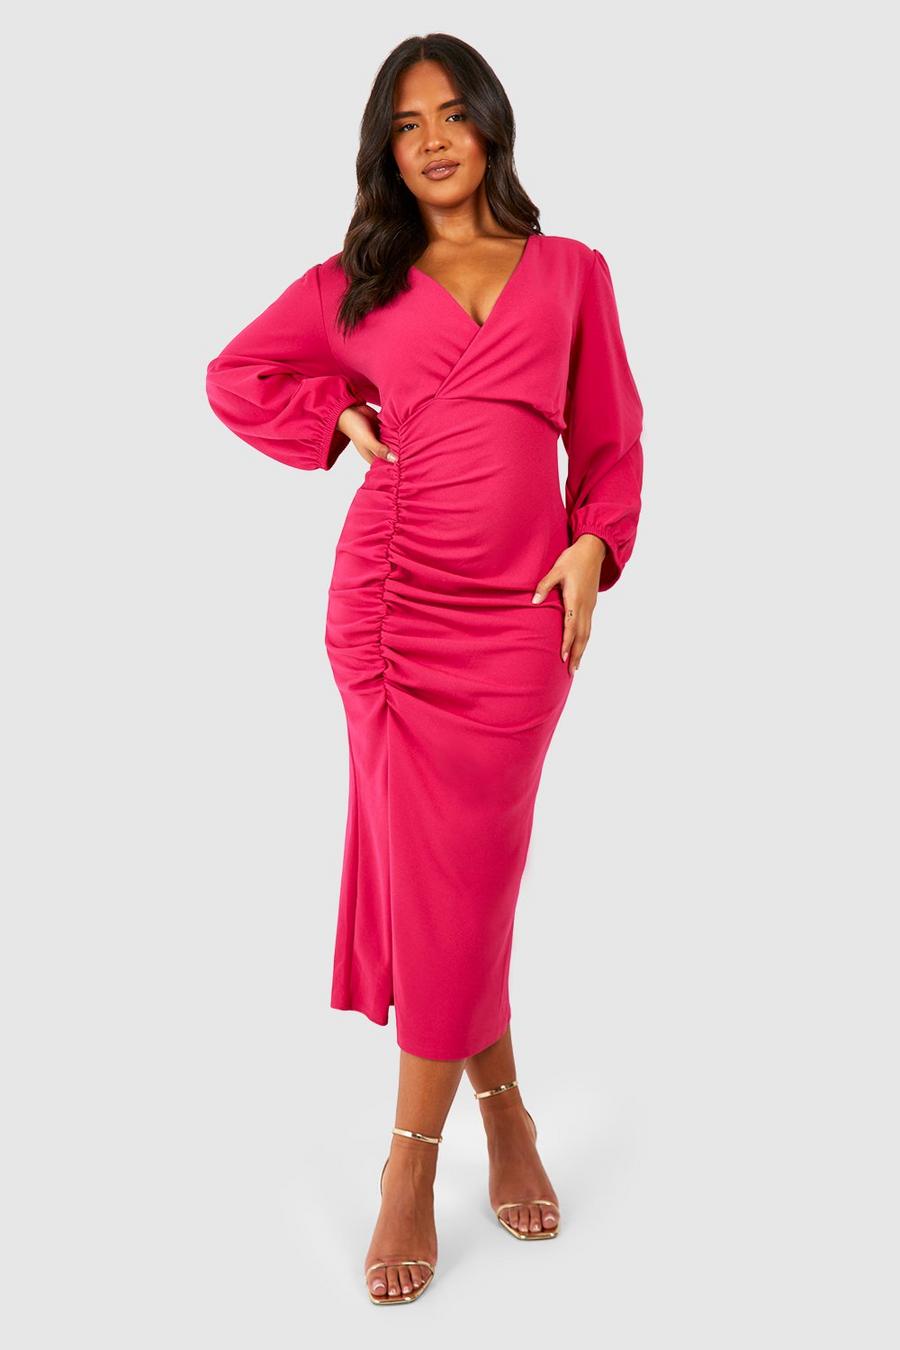 Hot pink Plus Rouched Wrap Cap Dress